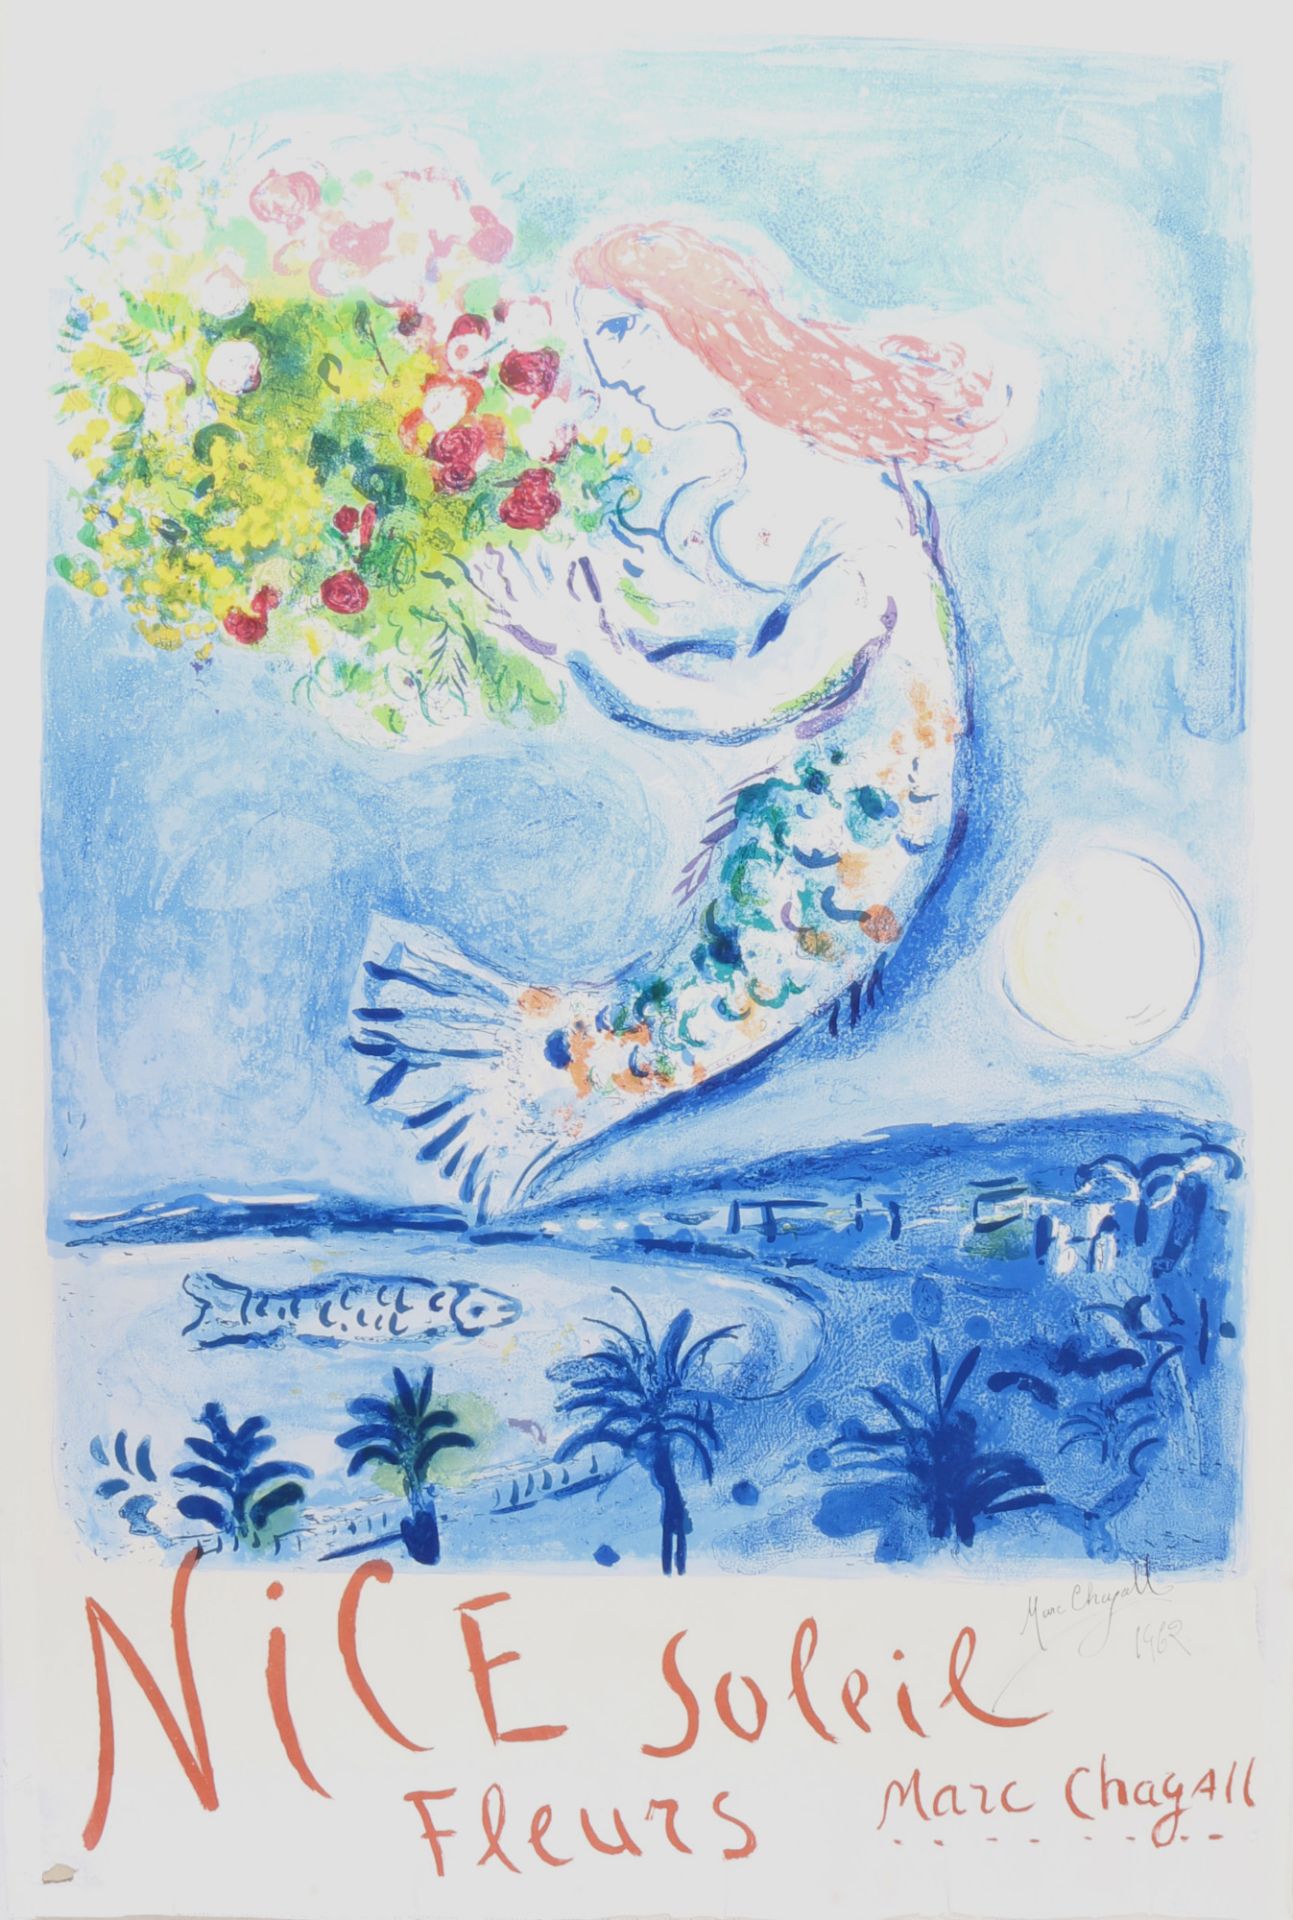 Marc Chagall (1887-1985) Bay of Angels (Nice soleil fleurs) 1962, Die Engelsbucht,